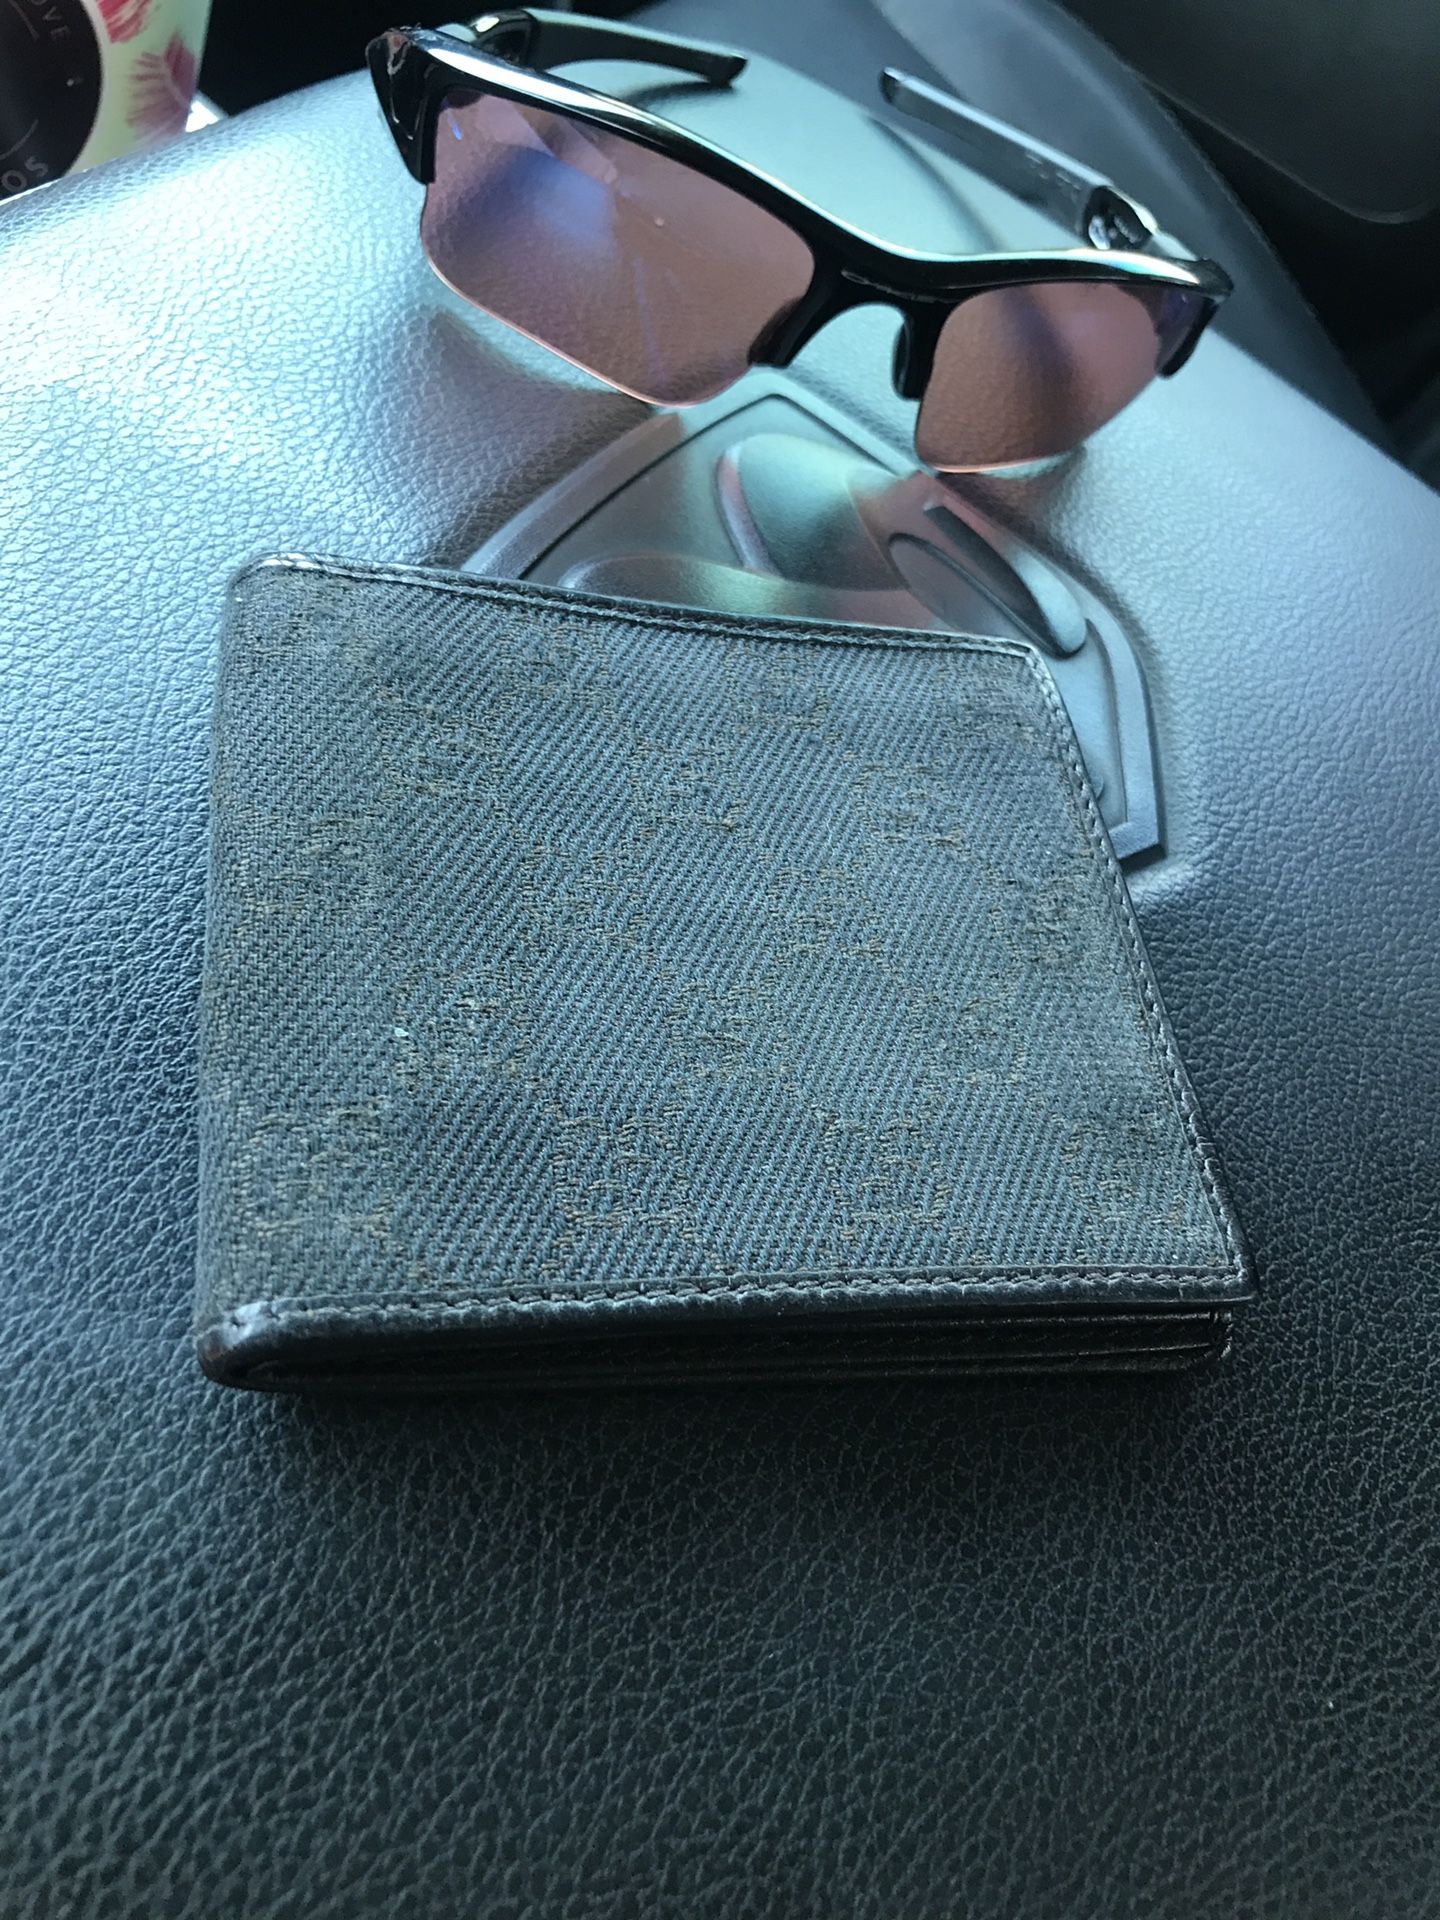 Gucci wallet. Oakley sunglasses